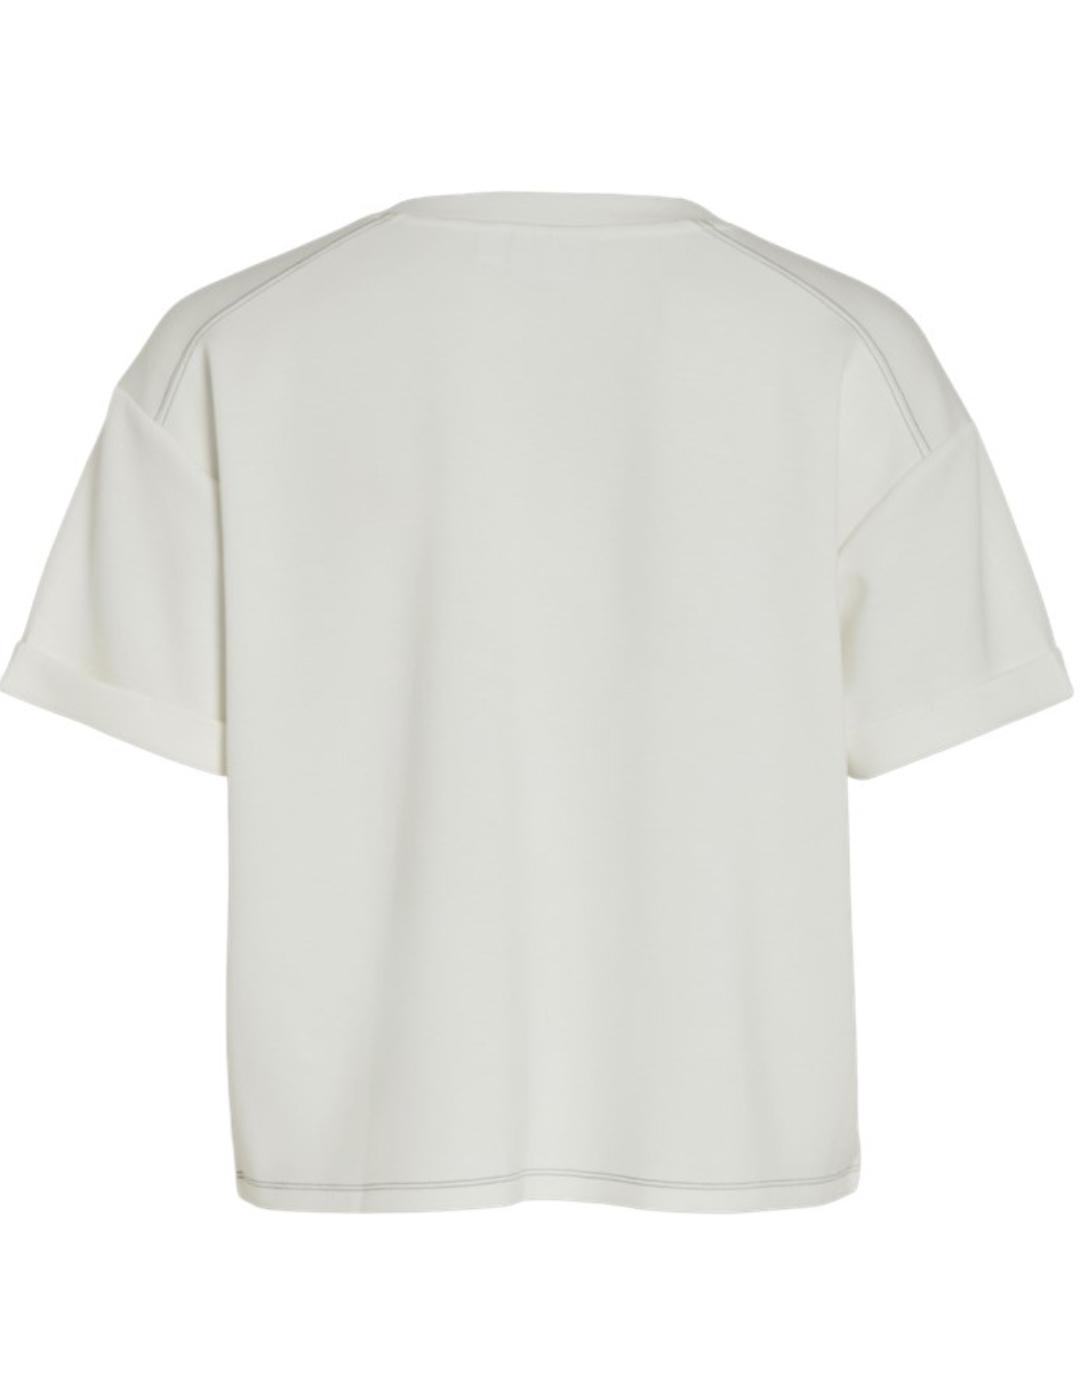 Camiseta Vila Karena blanco manga corta para mujer